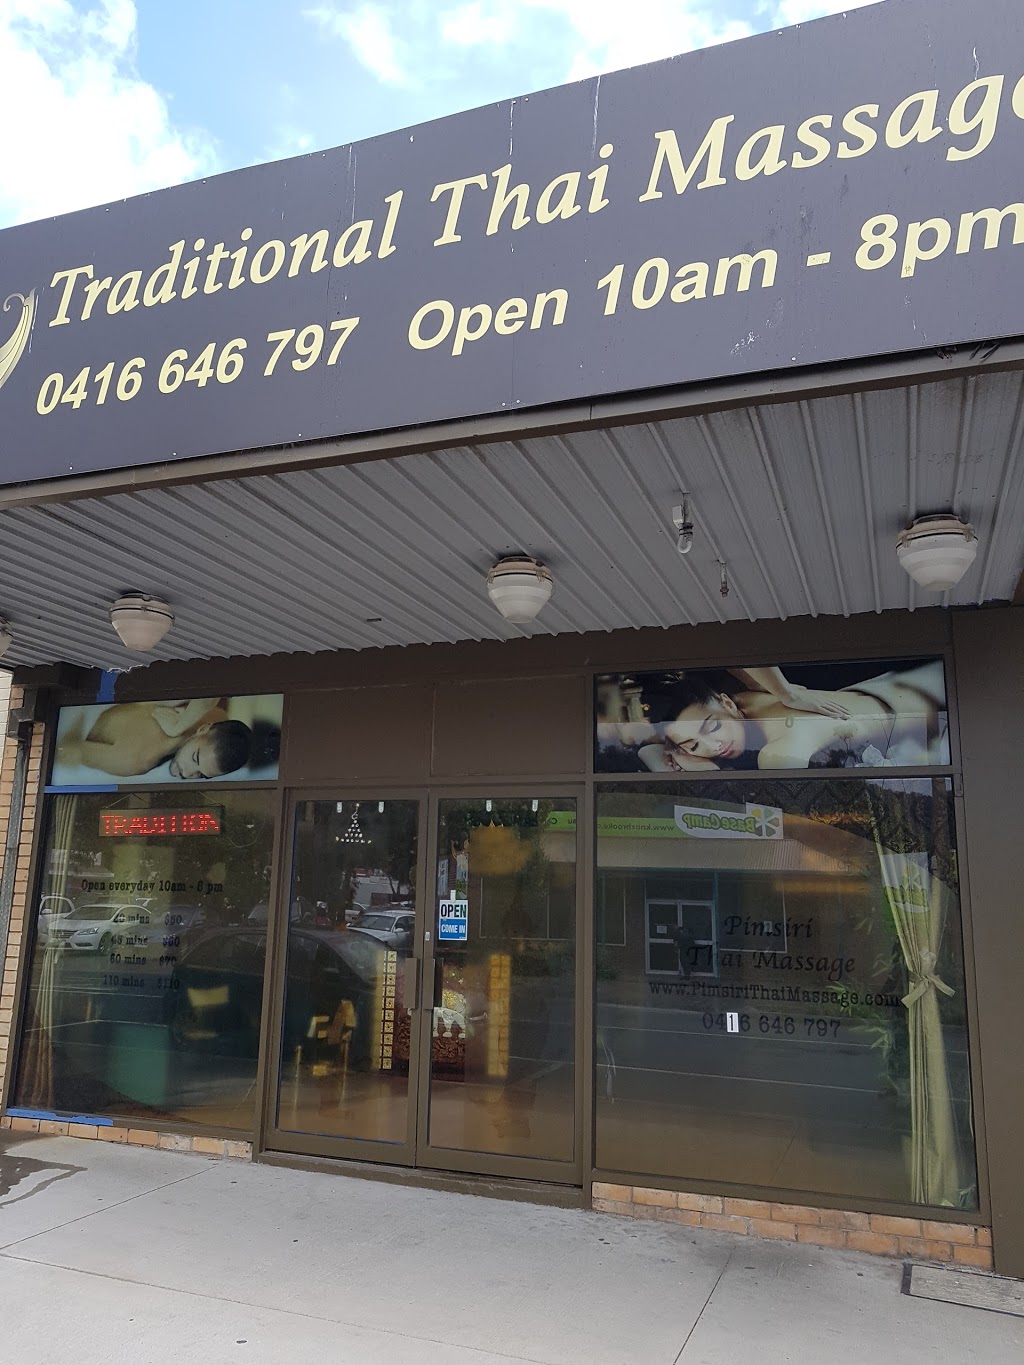 Serene Thai Massage | spa | 83 Station St, Ferntree Gully VIC 3156, Australia | 0382017118 OR +61 3 8201 7118